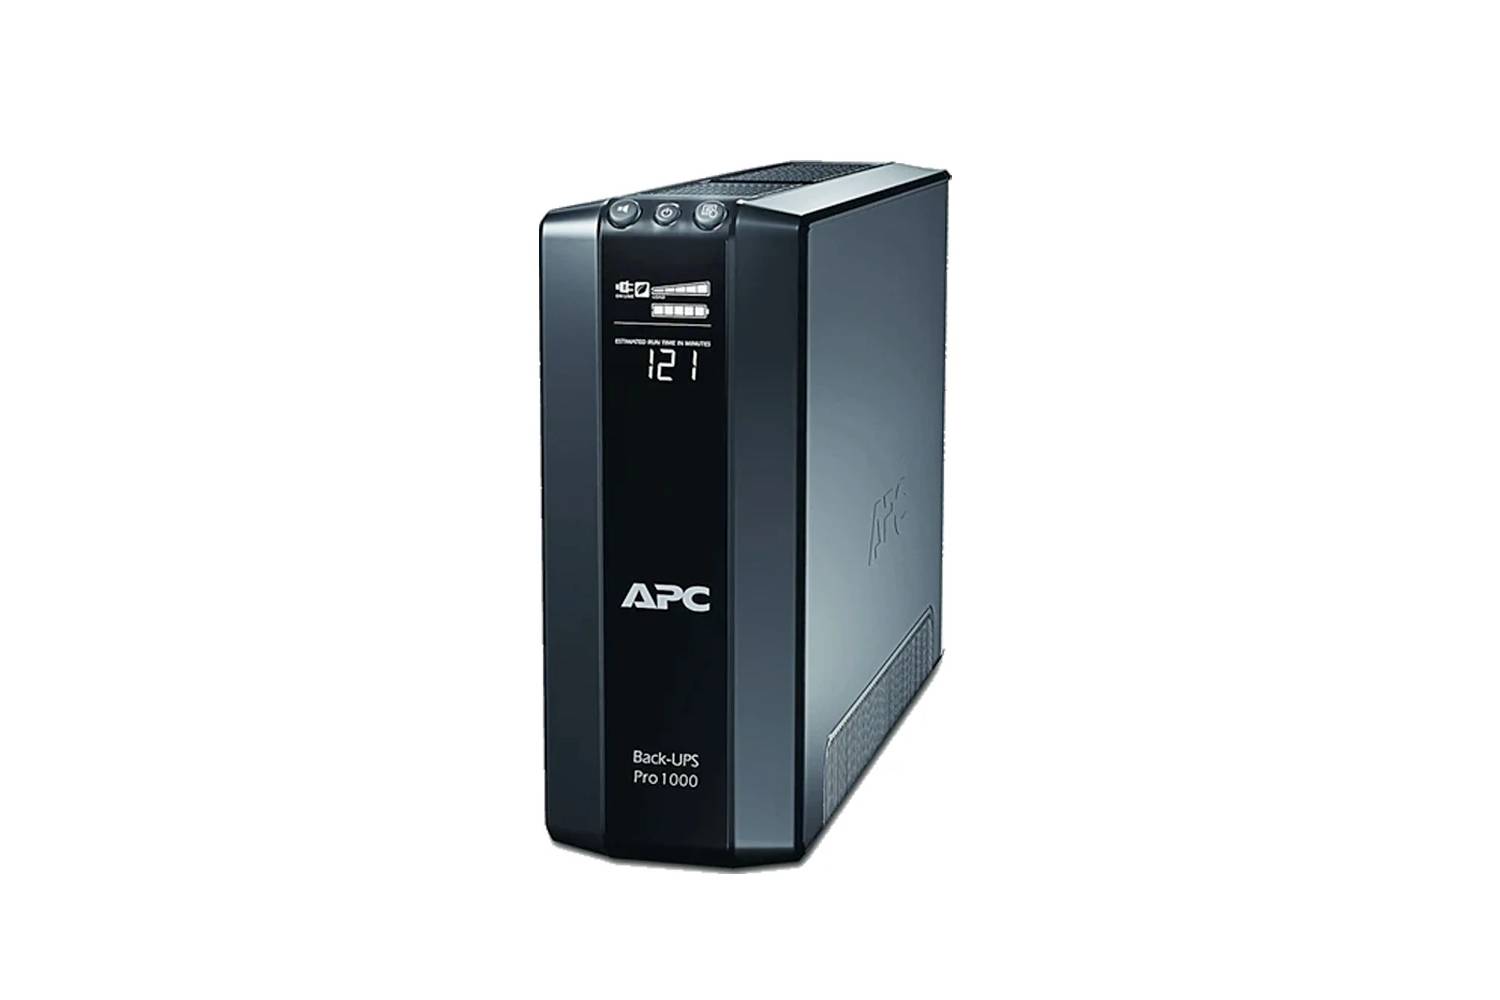 APC Power-Saving Pro 1000 with LCD, 230V BR1000G Back-UPS-UPS-APC-computerspace